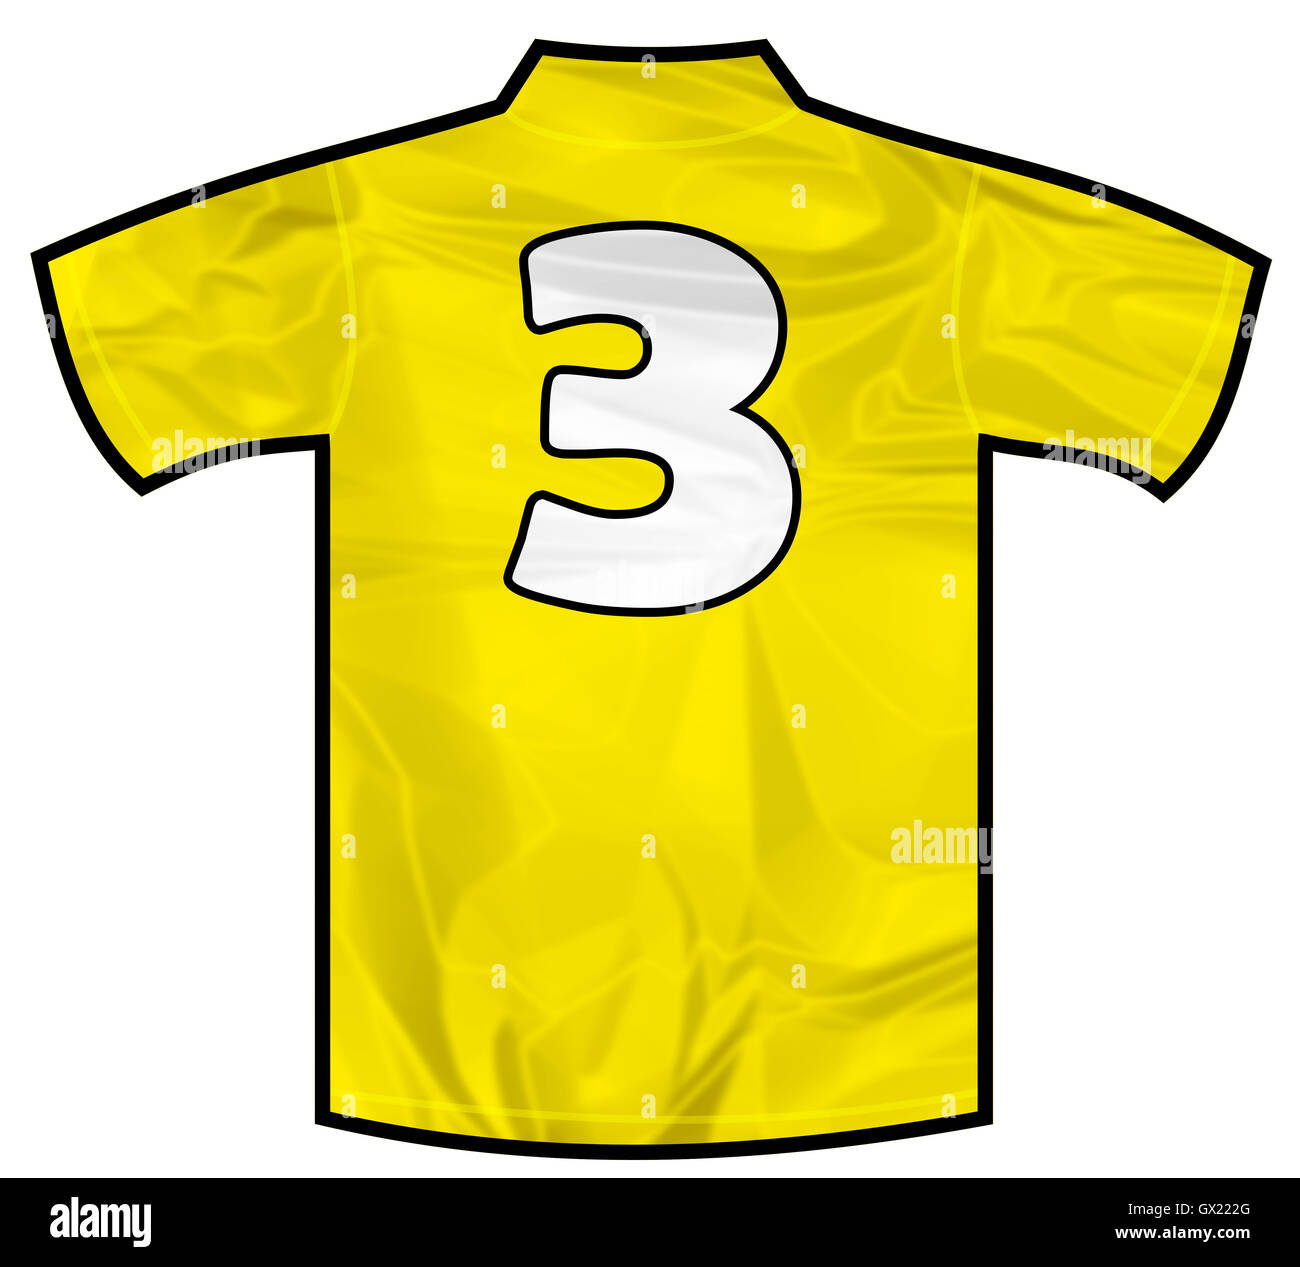 soccer jersey number 3